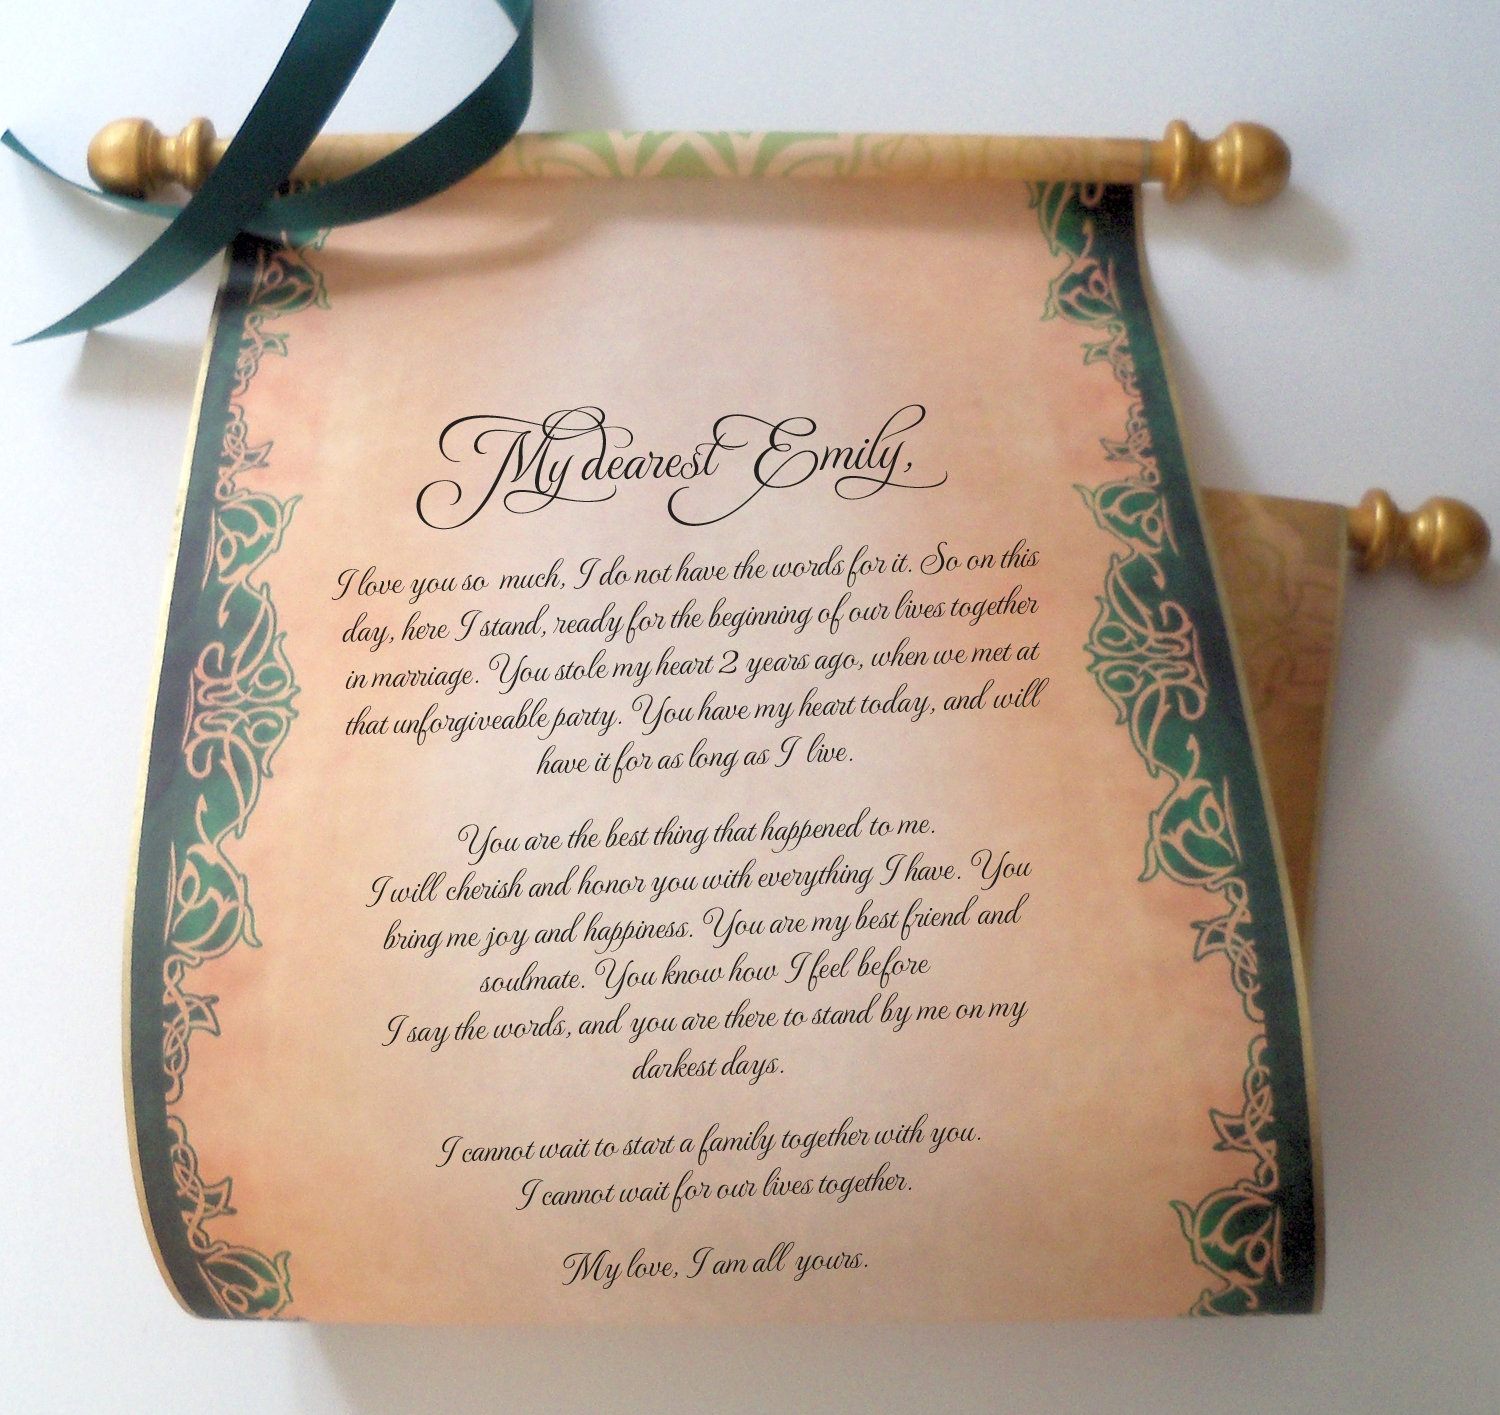 Gold Wedding Invitations, Elegant Scroll Invitations, Handmade Invites,  Paper Scroll With Ribbon, Gold Anniversary, Medieval Wedding, 10 